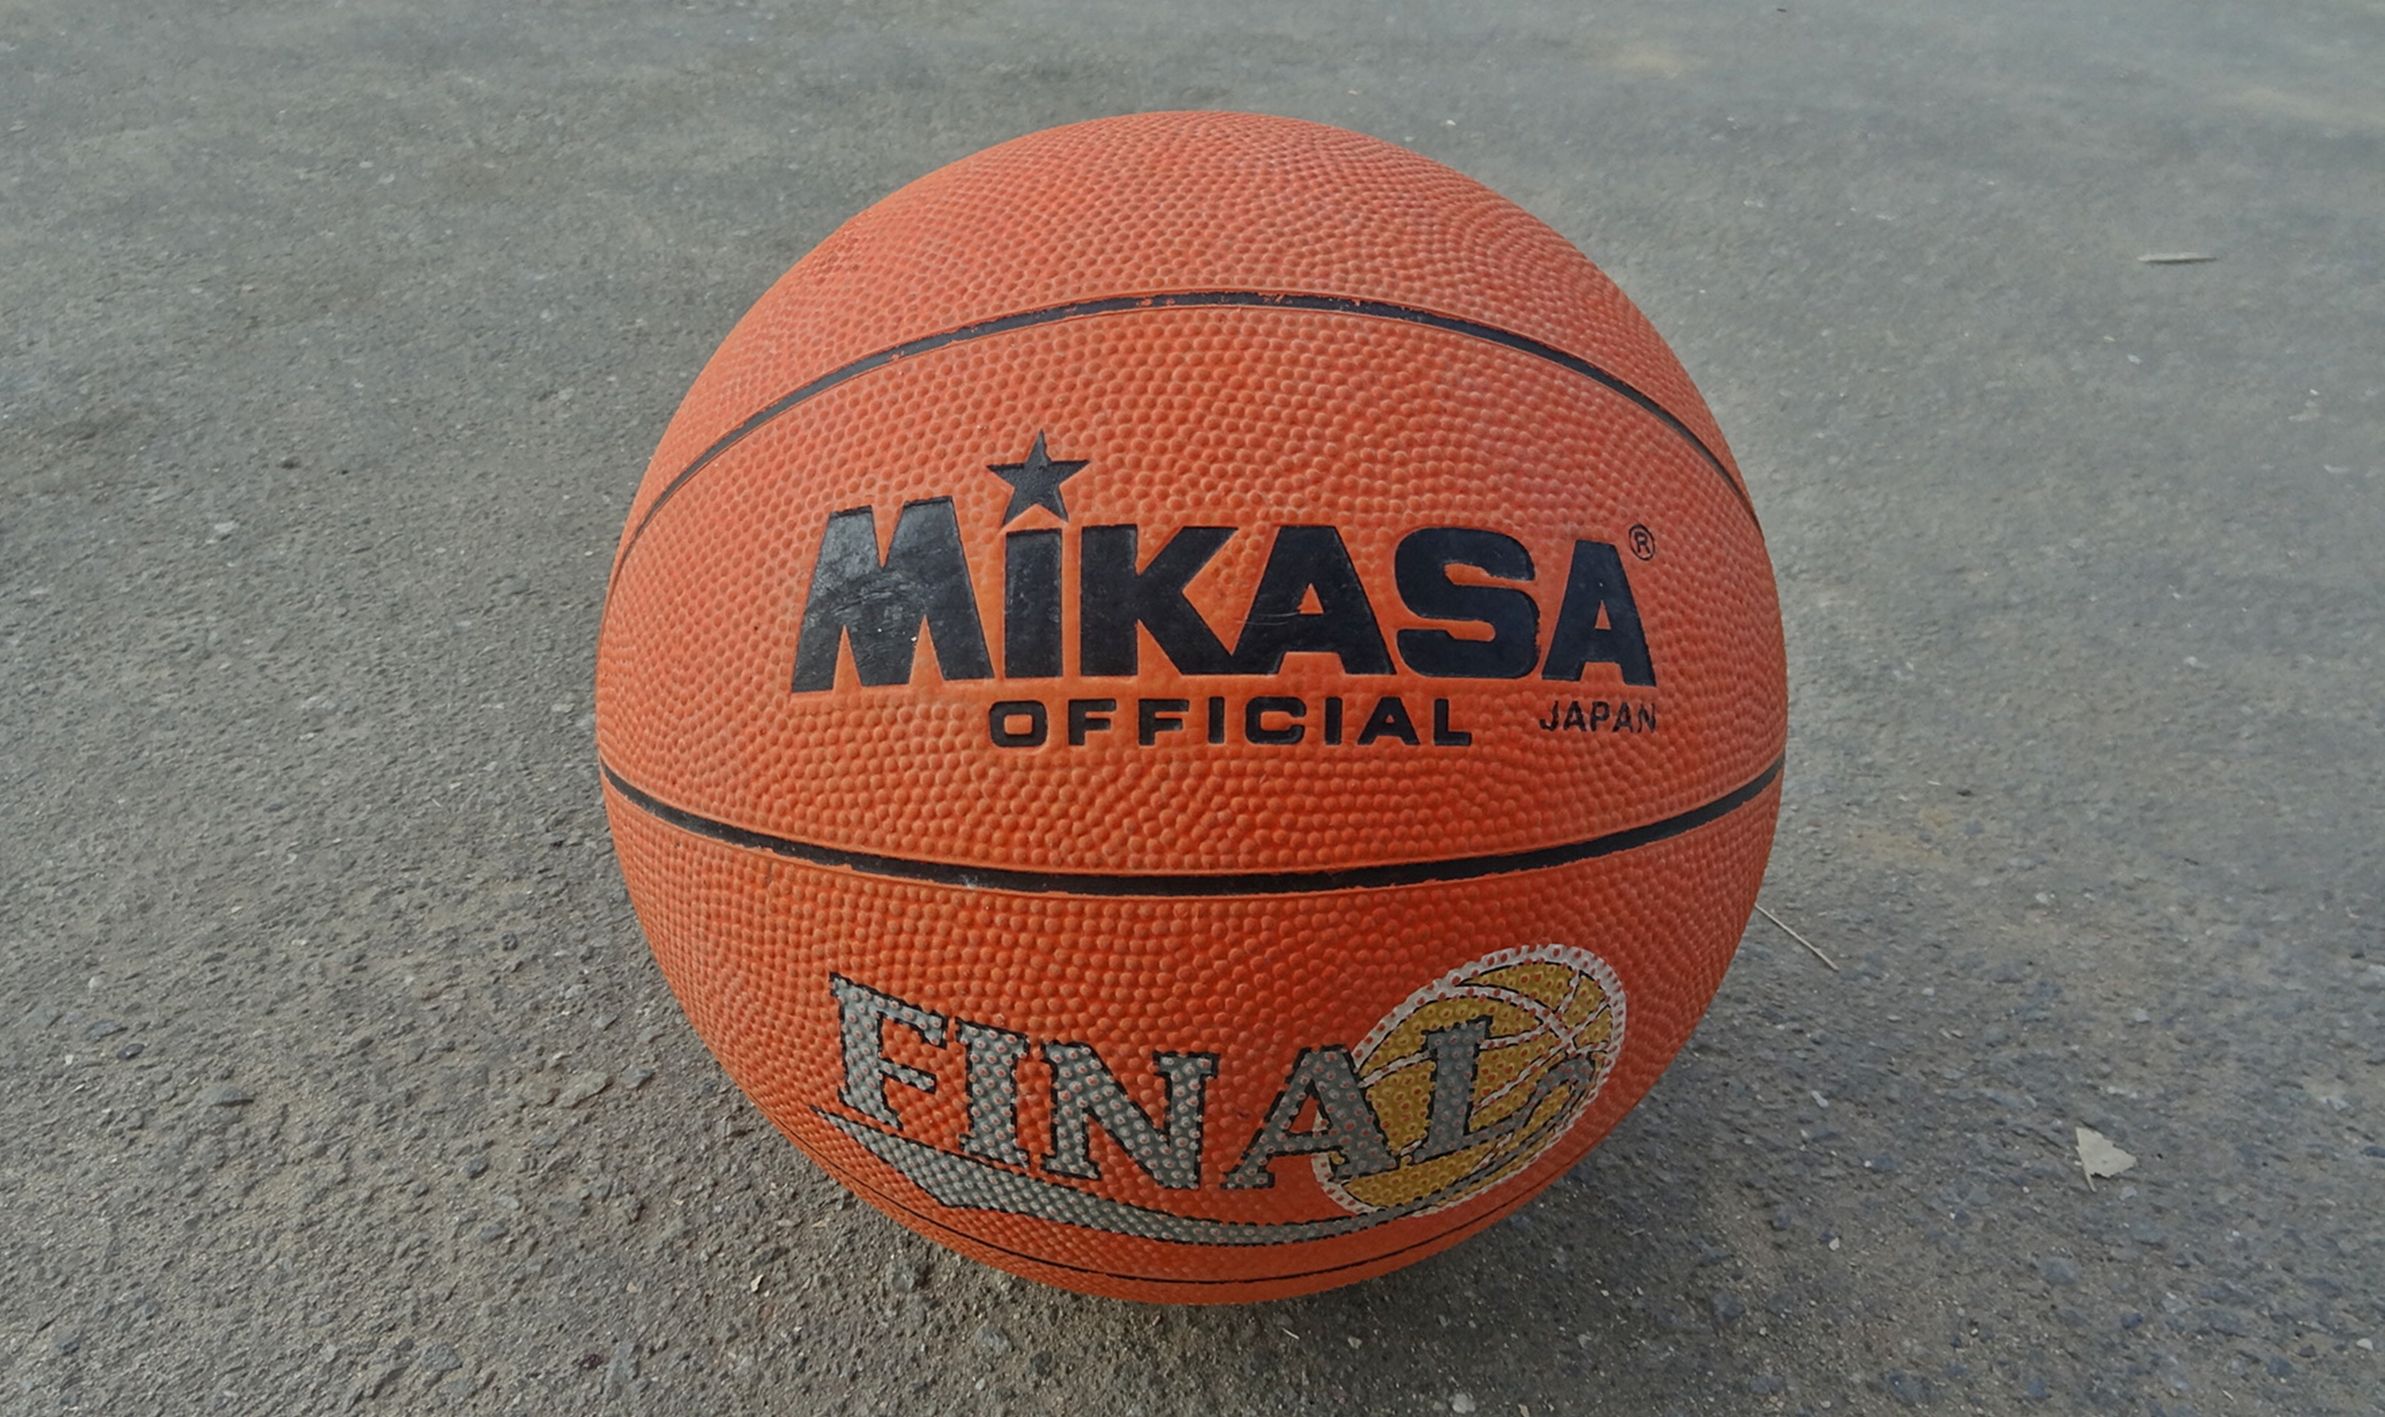 A mikasa basket ball